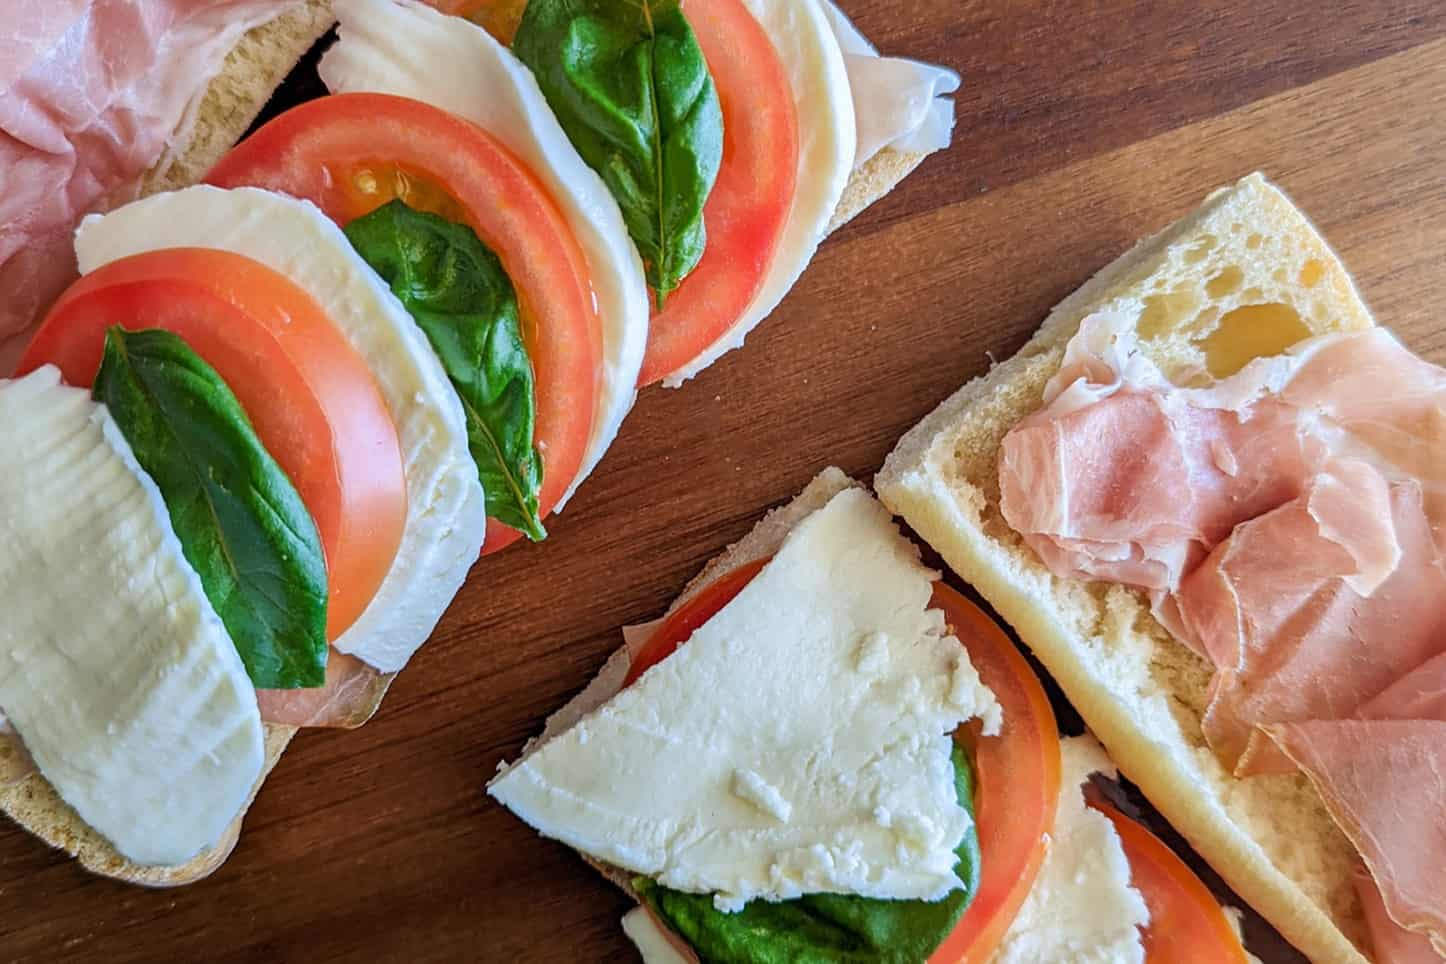 A close up of a caprese sandwich with prosciutto